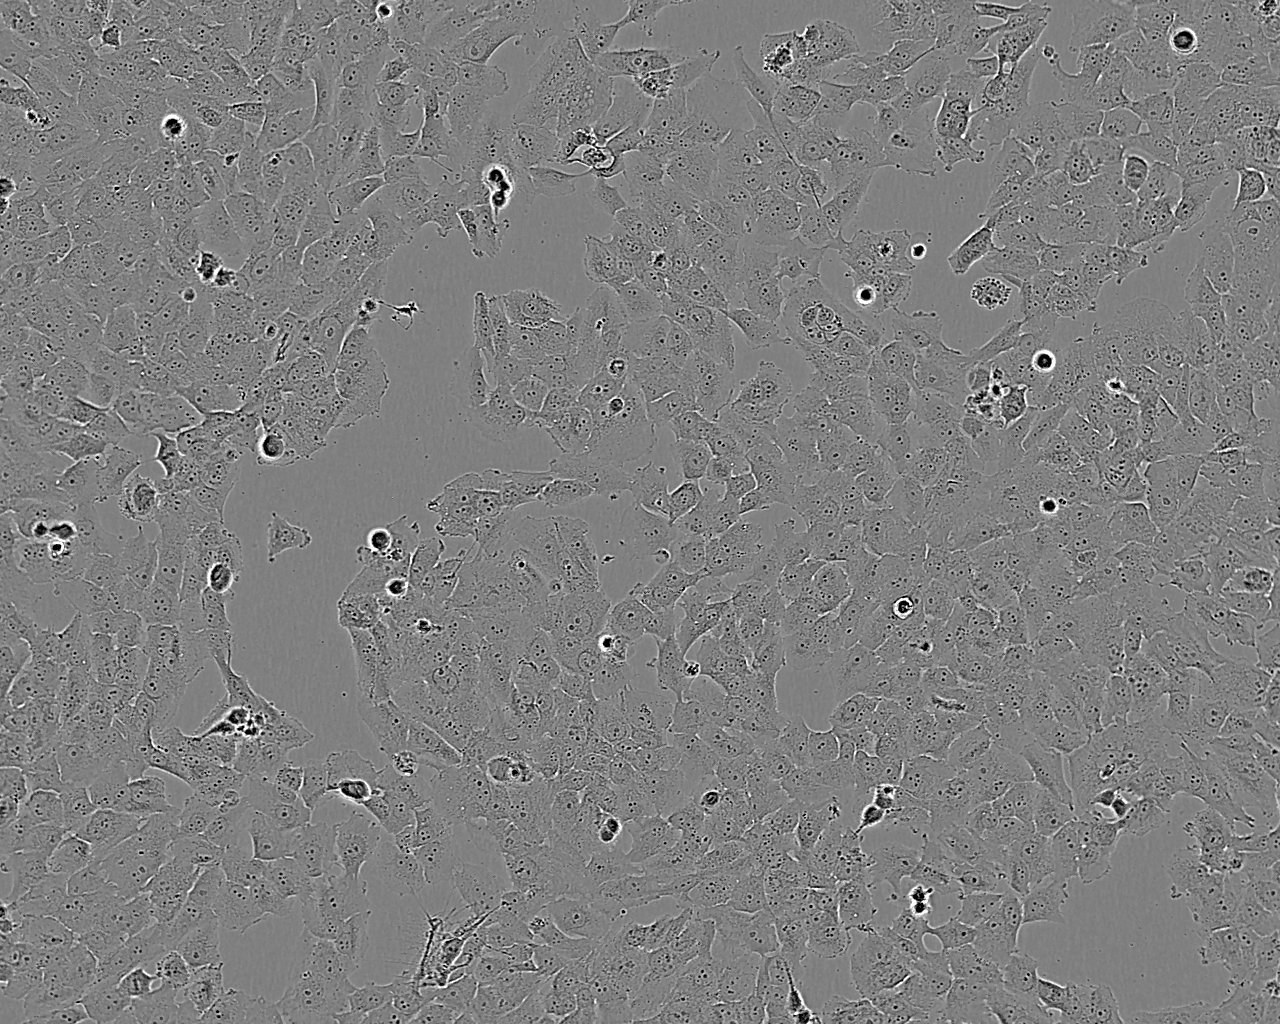 BEL-7402 epithelioid cells人肝癌细胞系